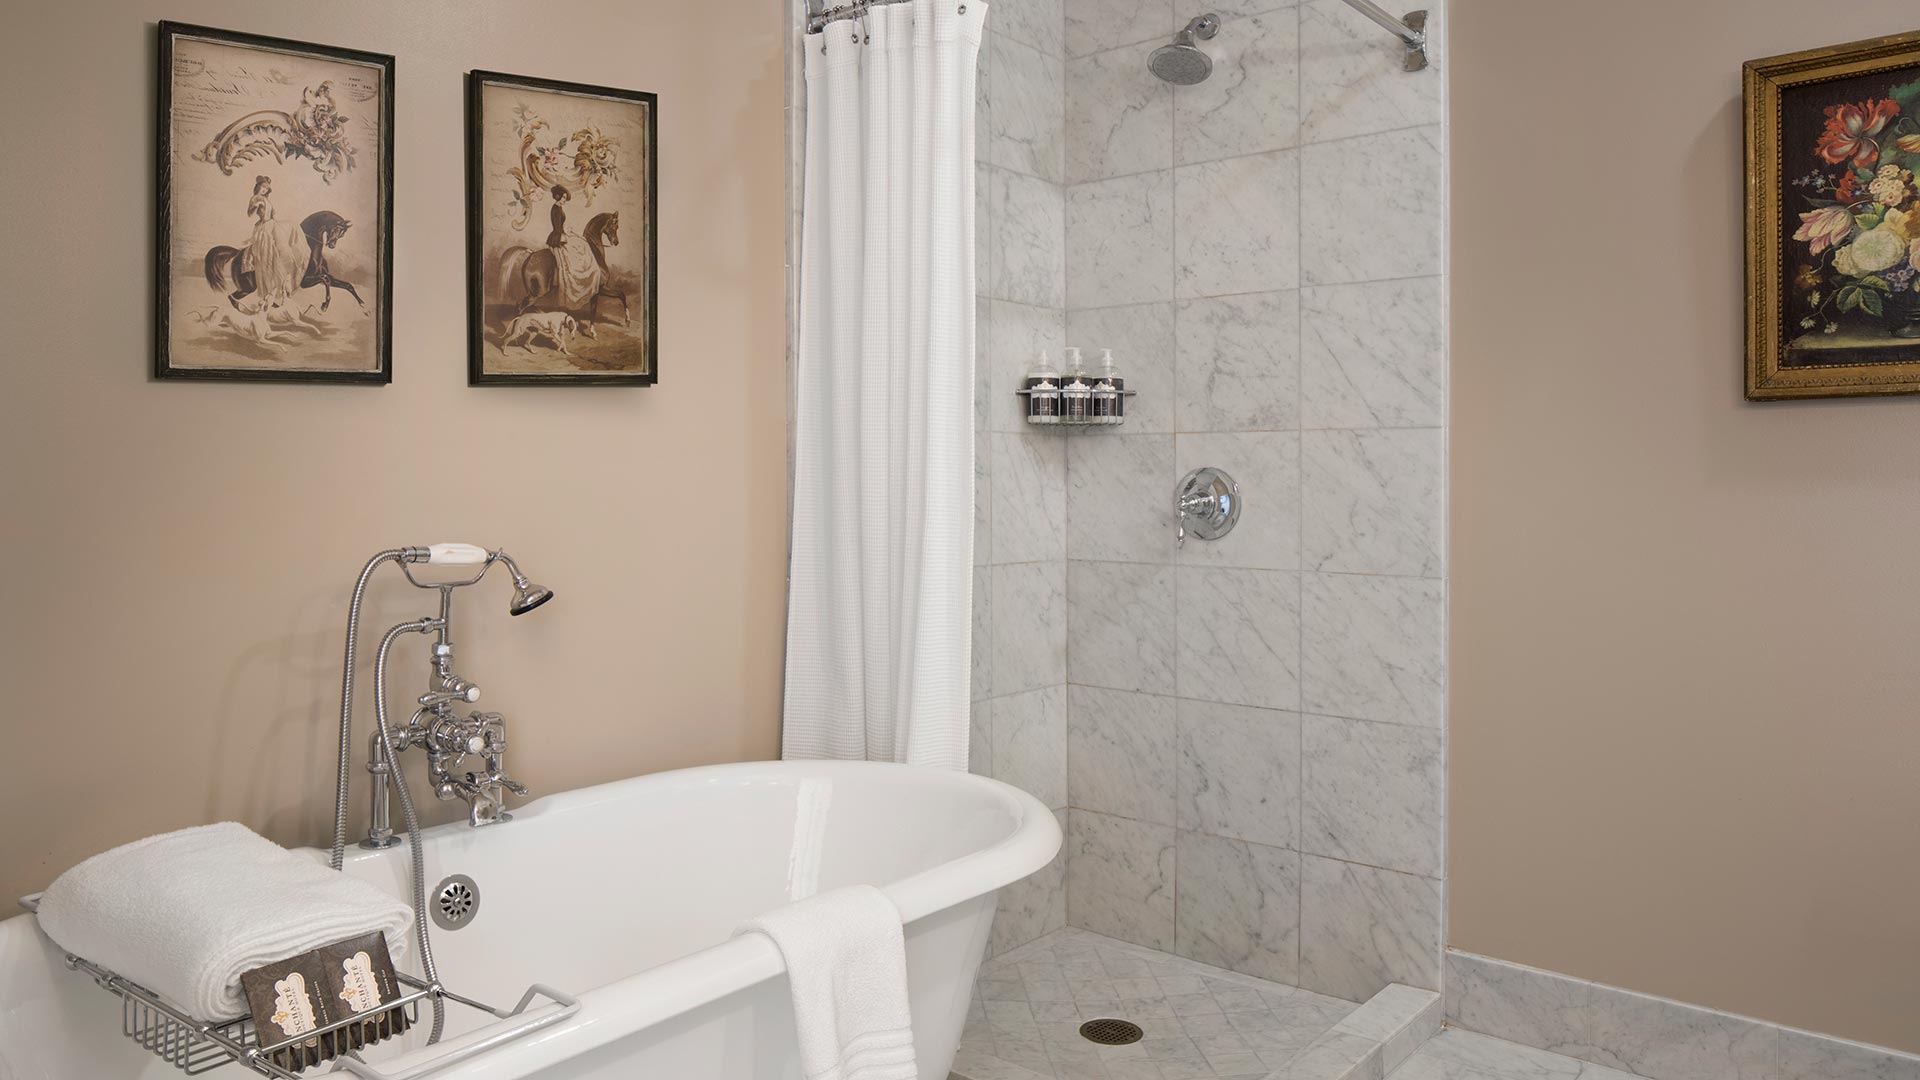 Carrera marble bathroom with porcelain pedestal tub.